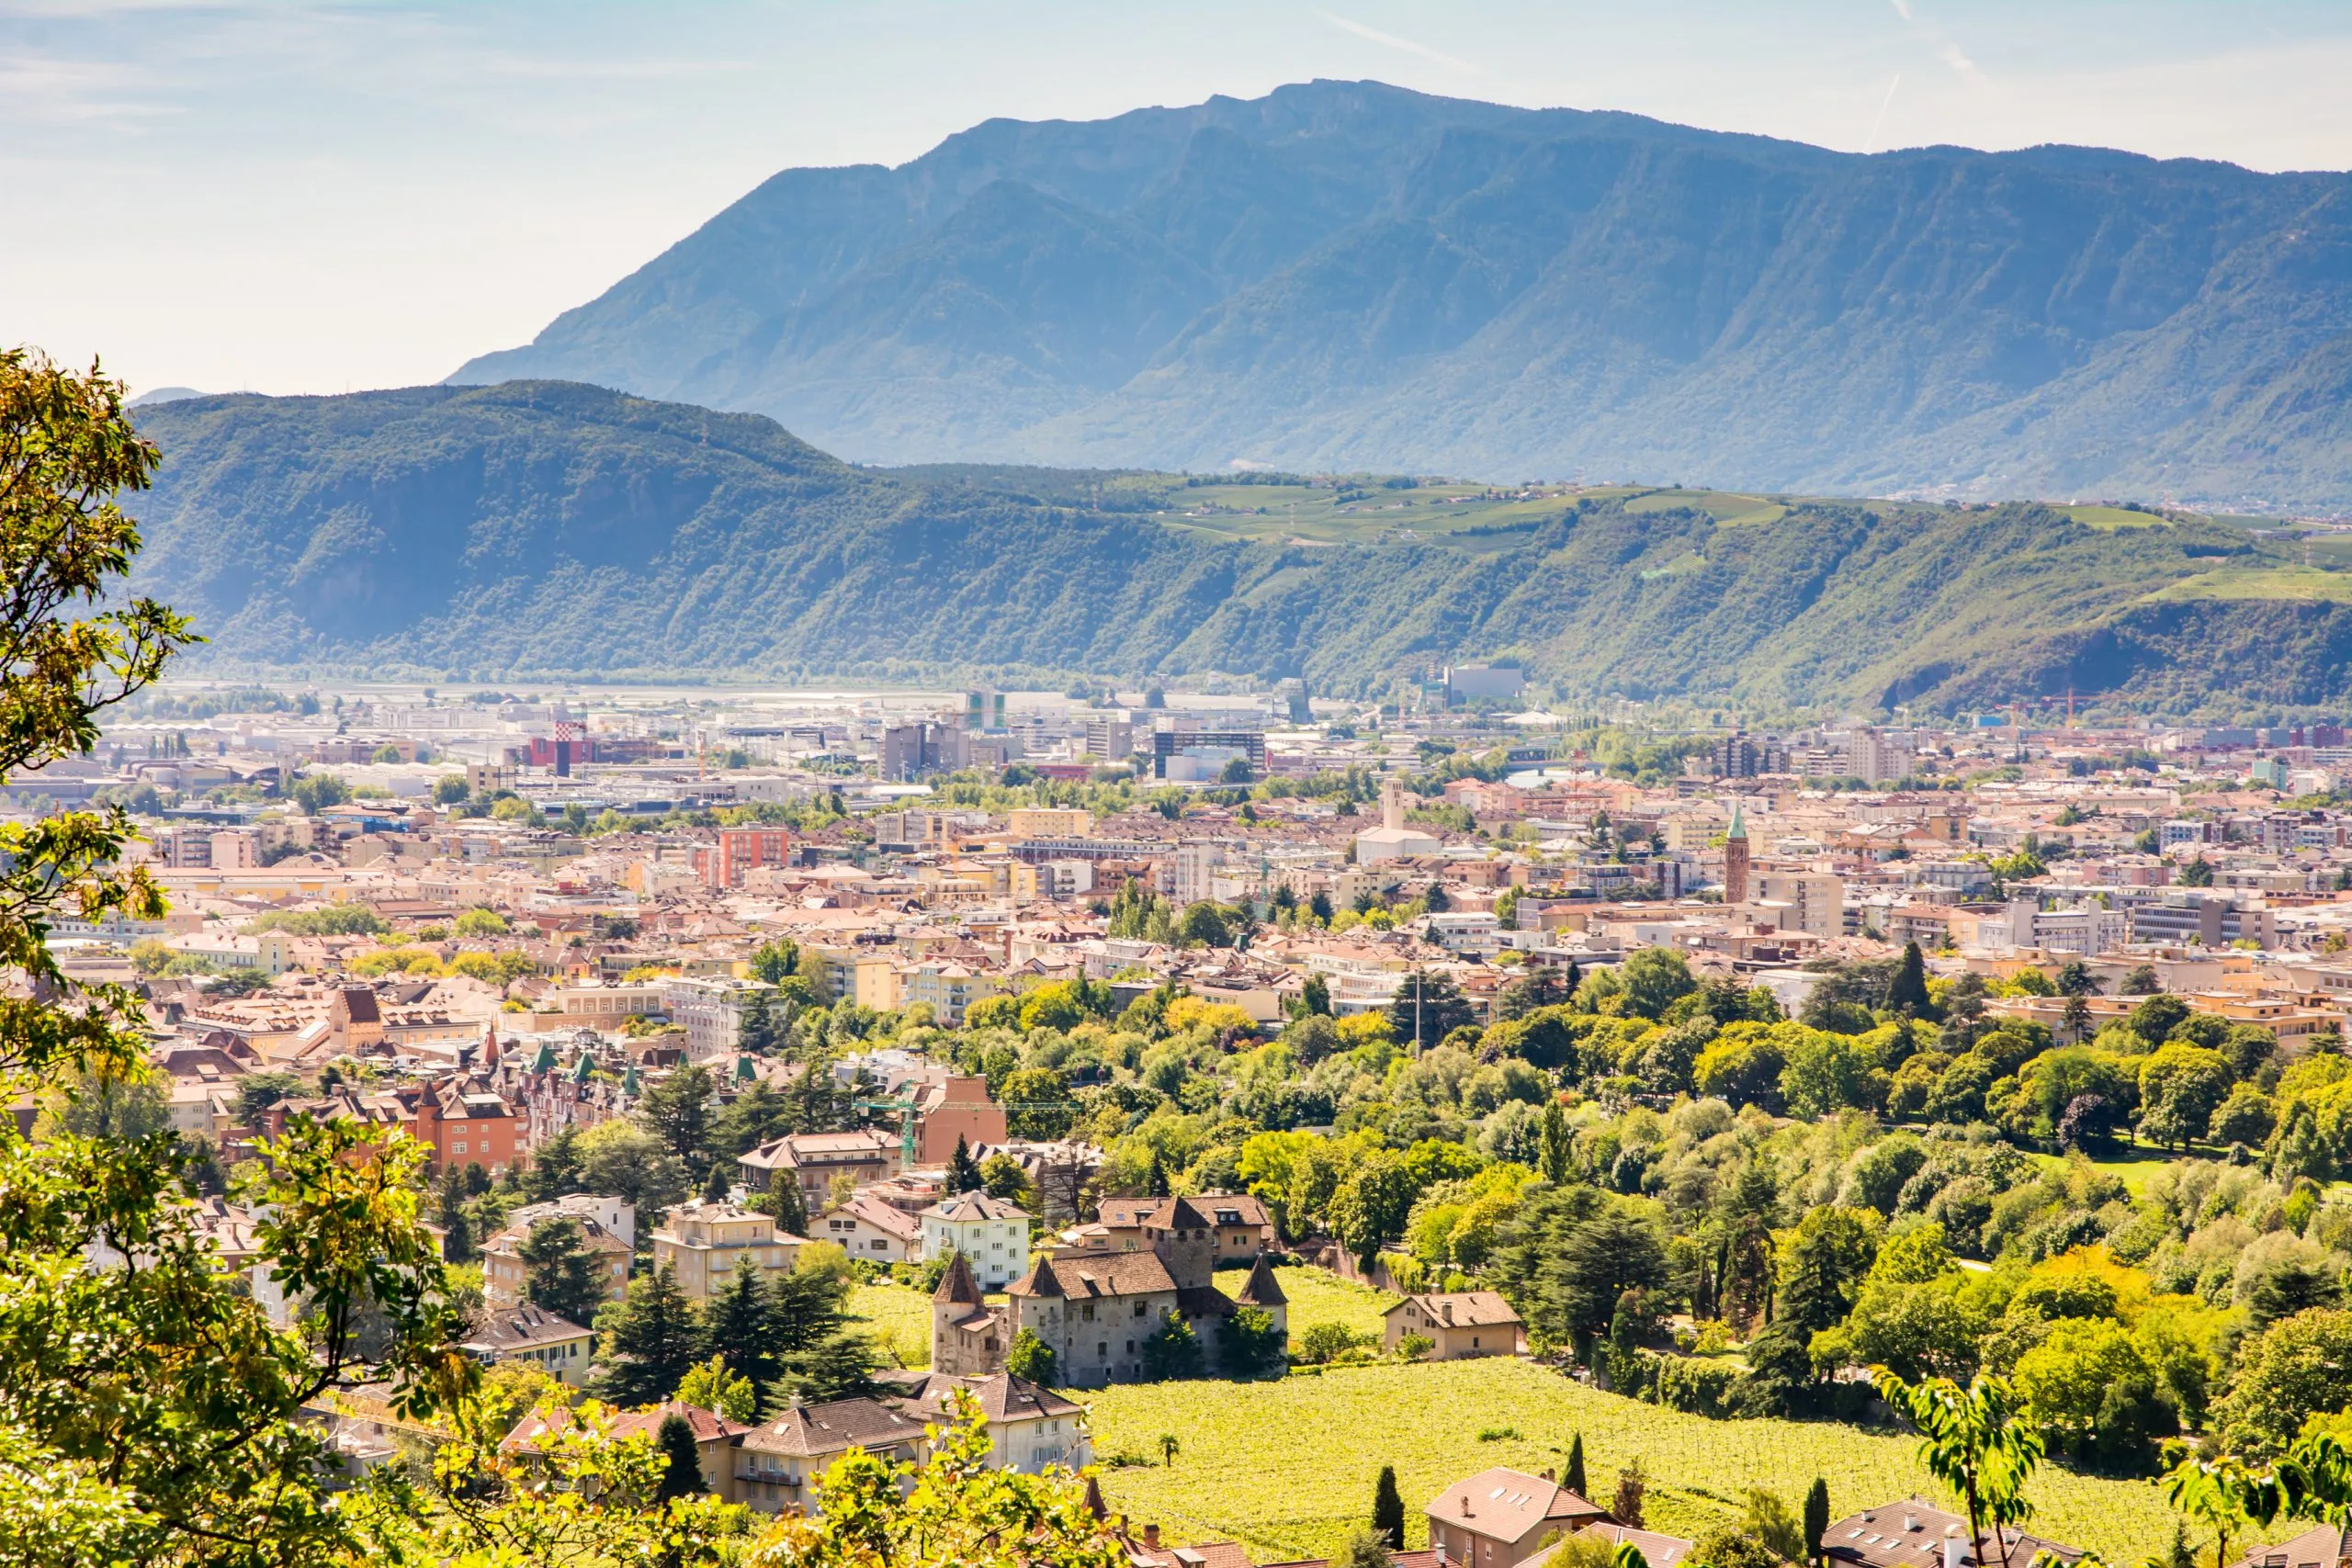 Uitzicht over Bolzano